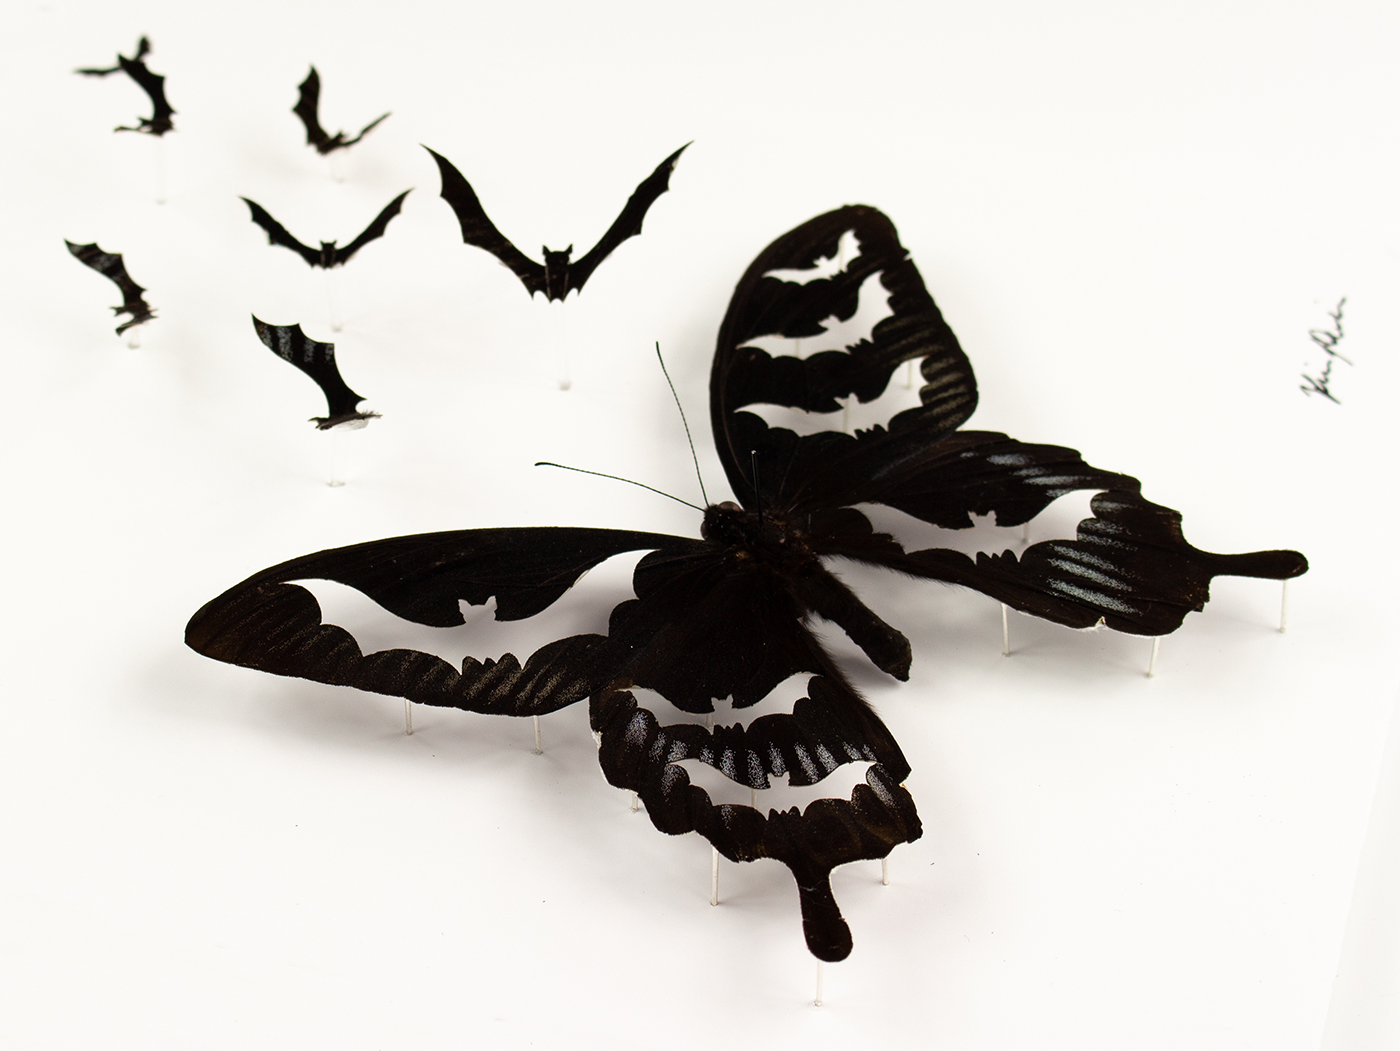 Metamorphosis taxidermy artwork, closeup image of butterfly cut into bats